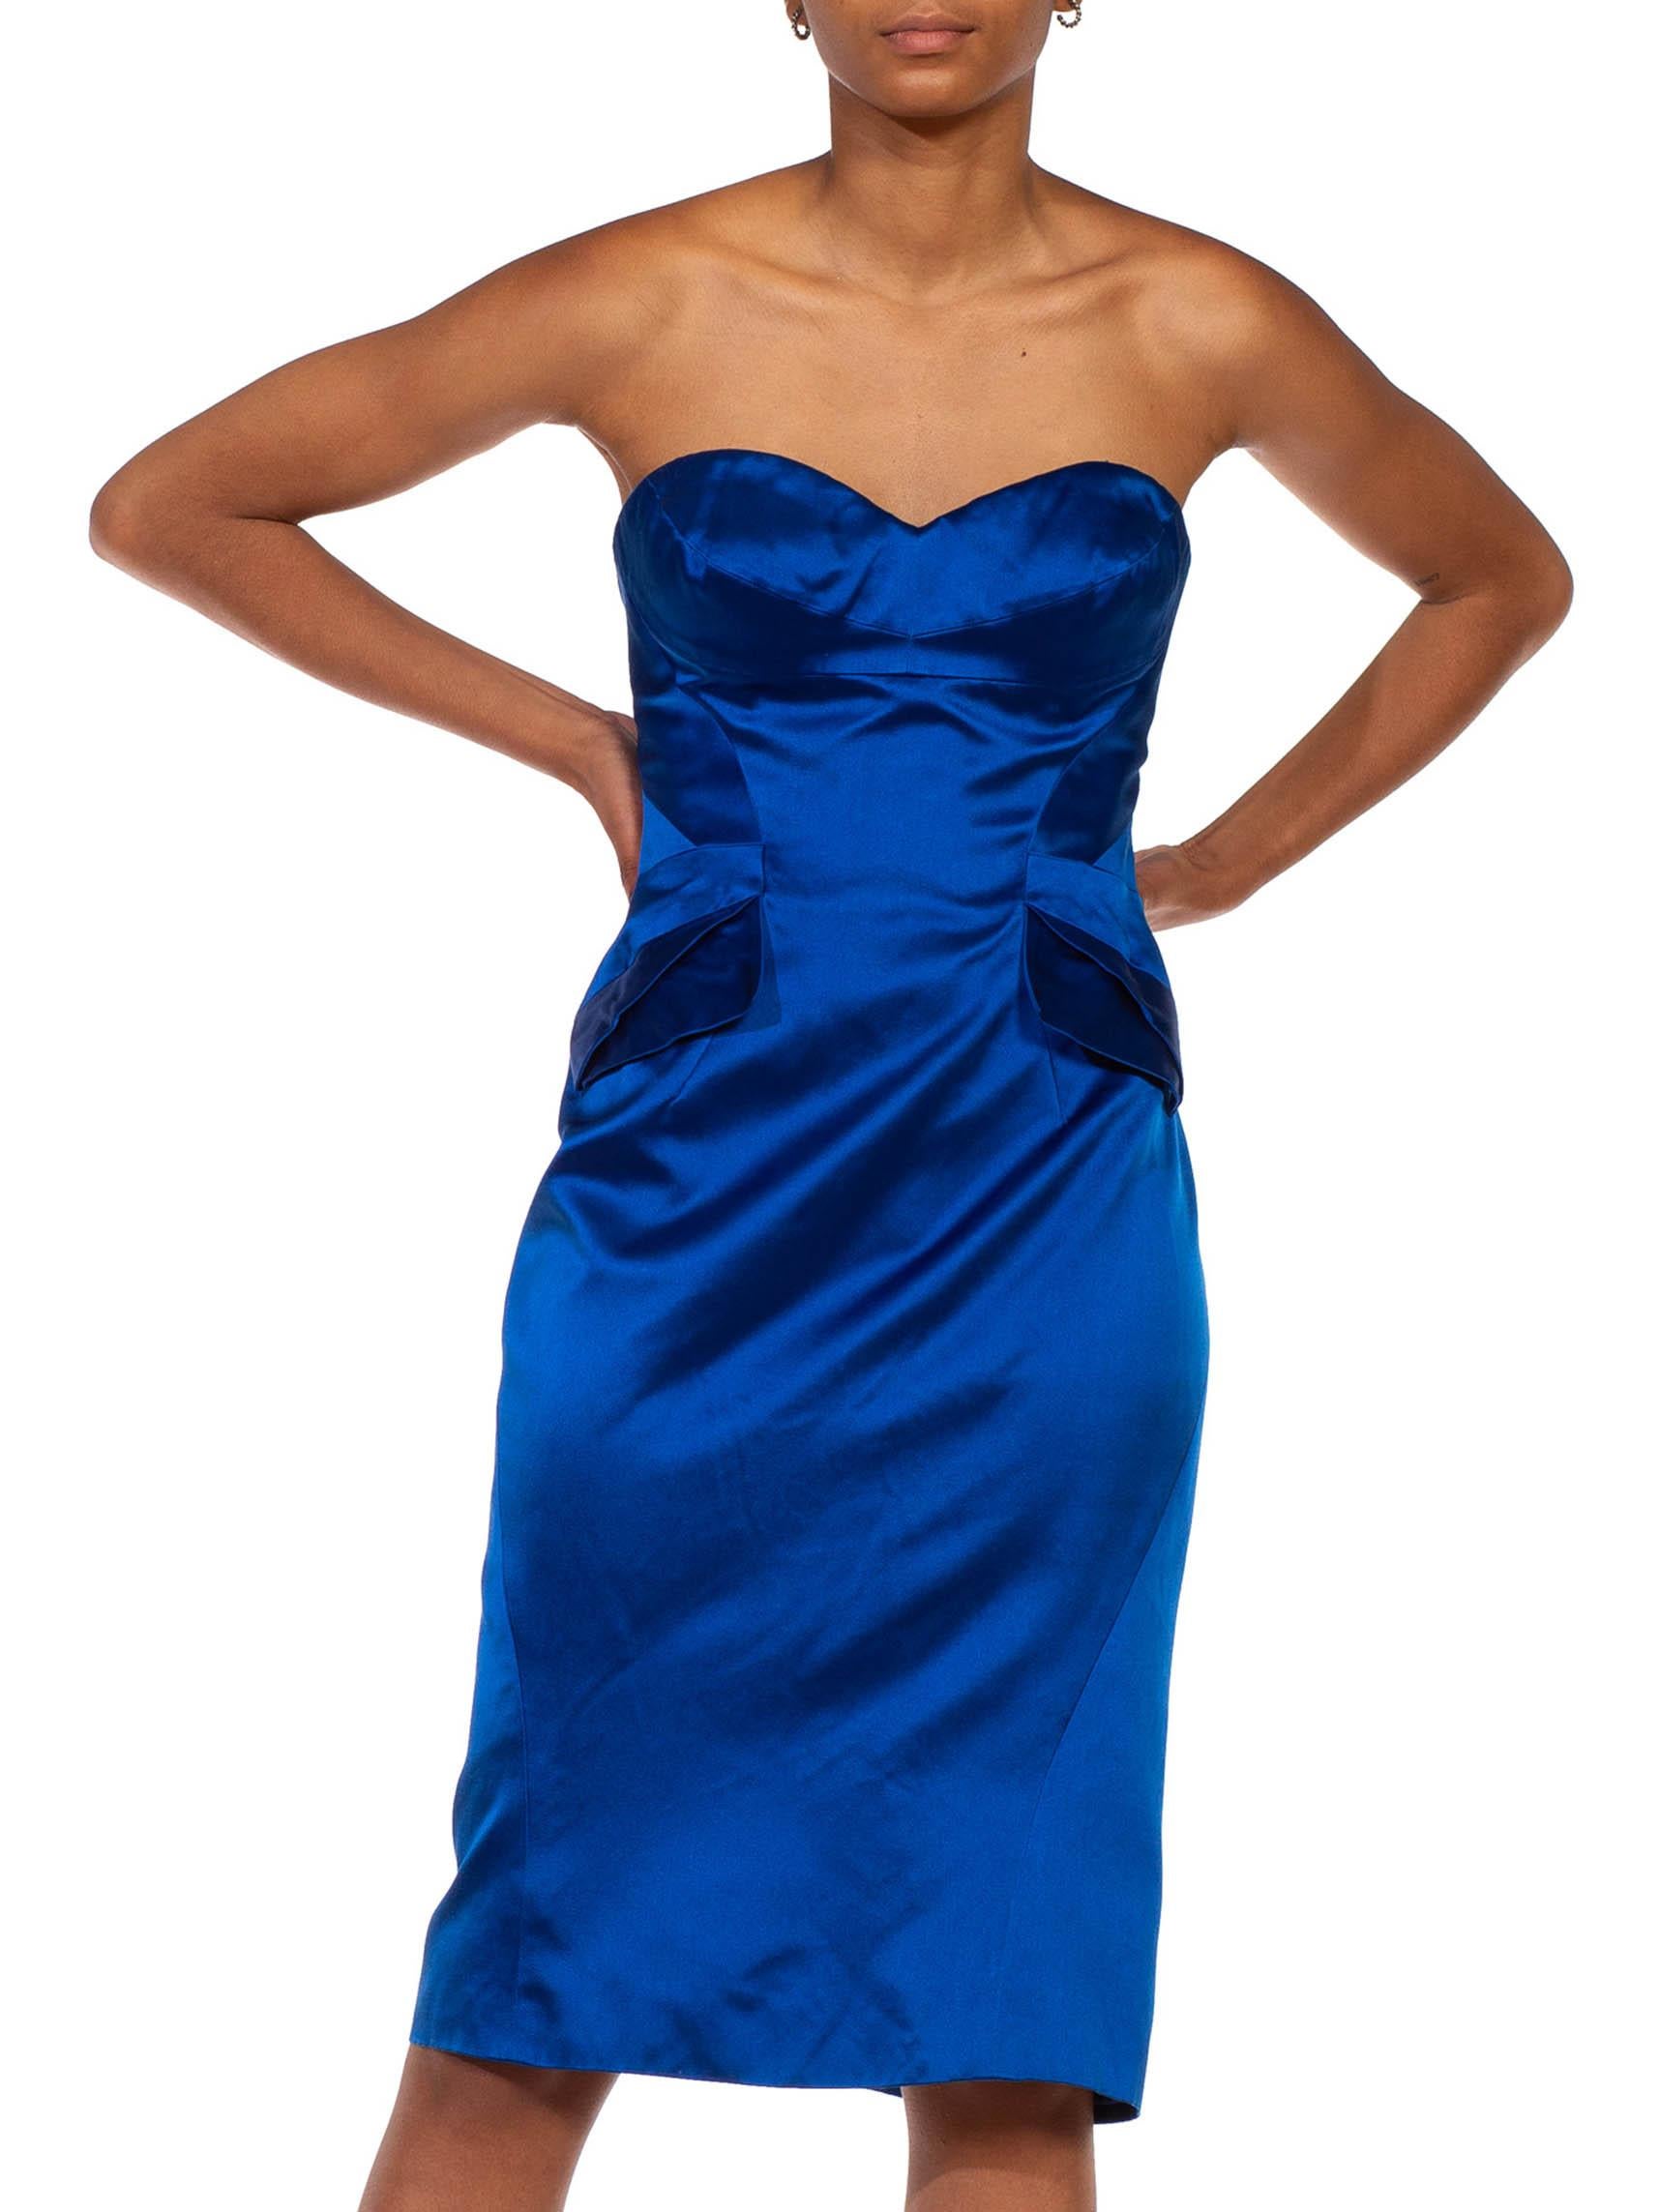 2000s blue dress